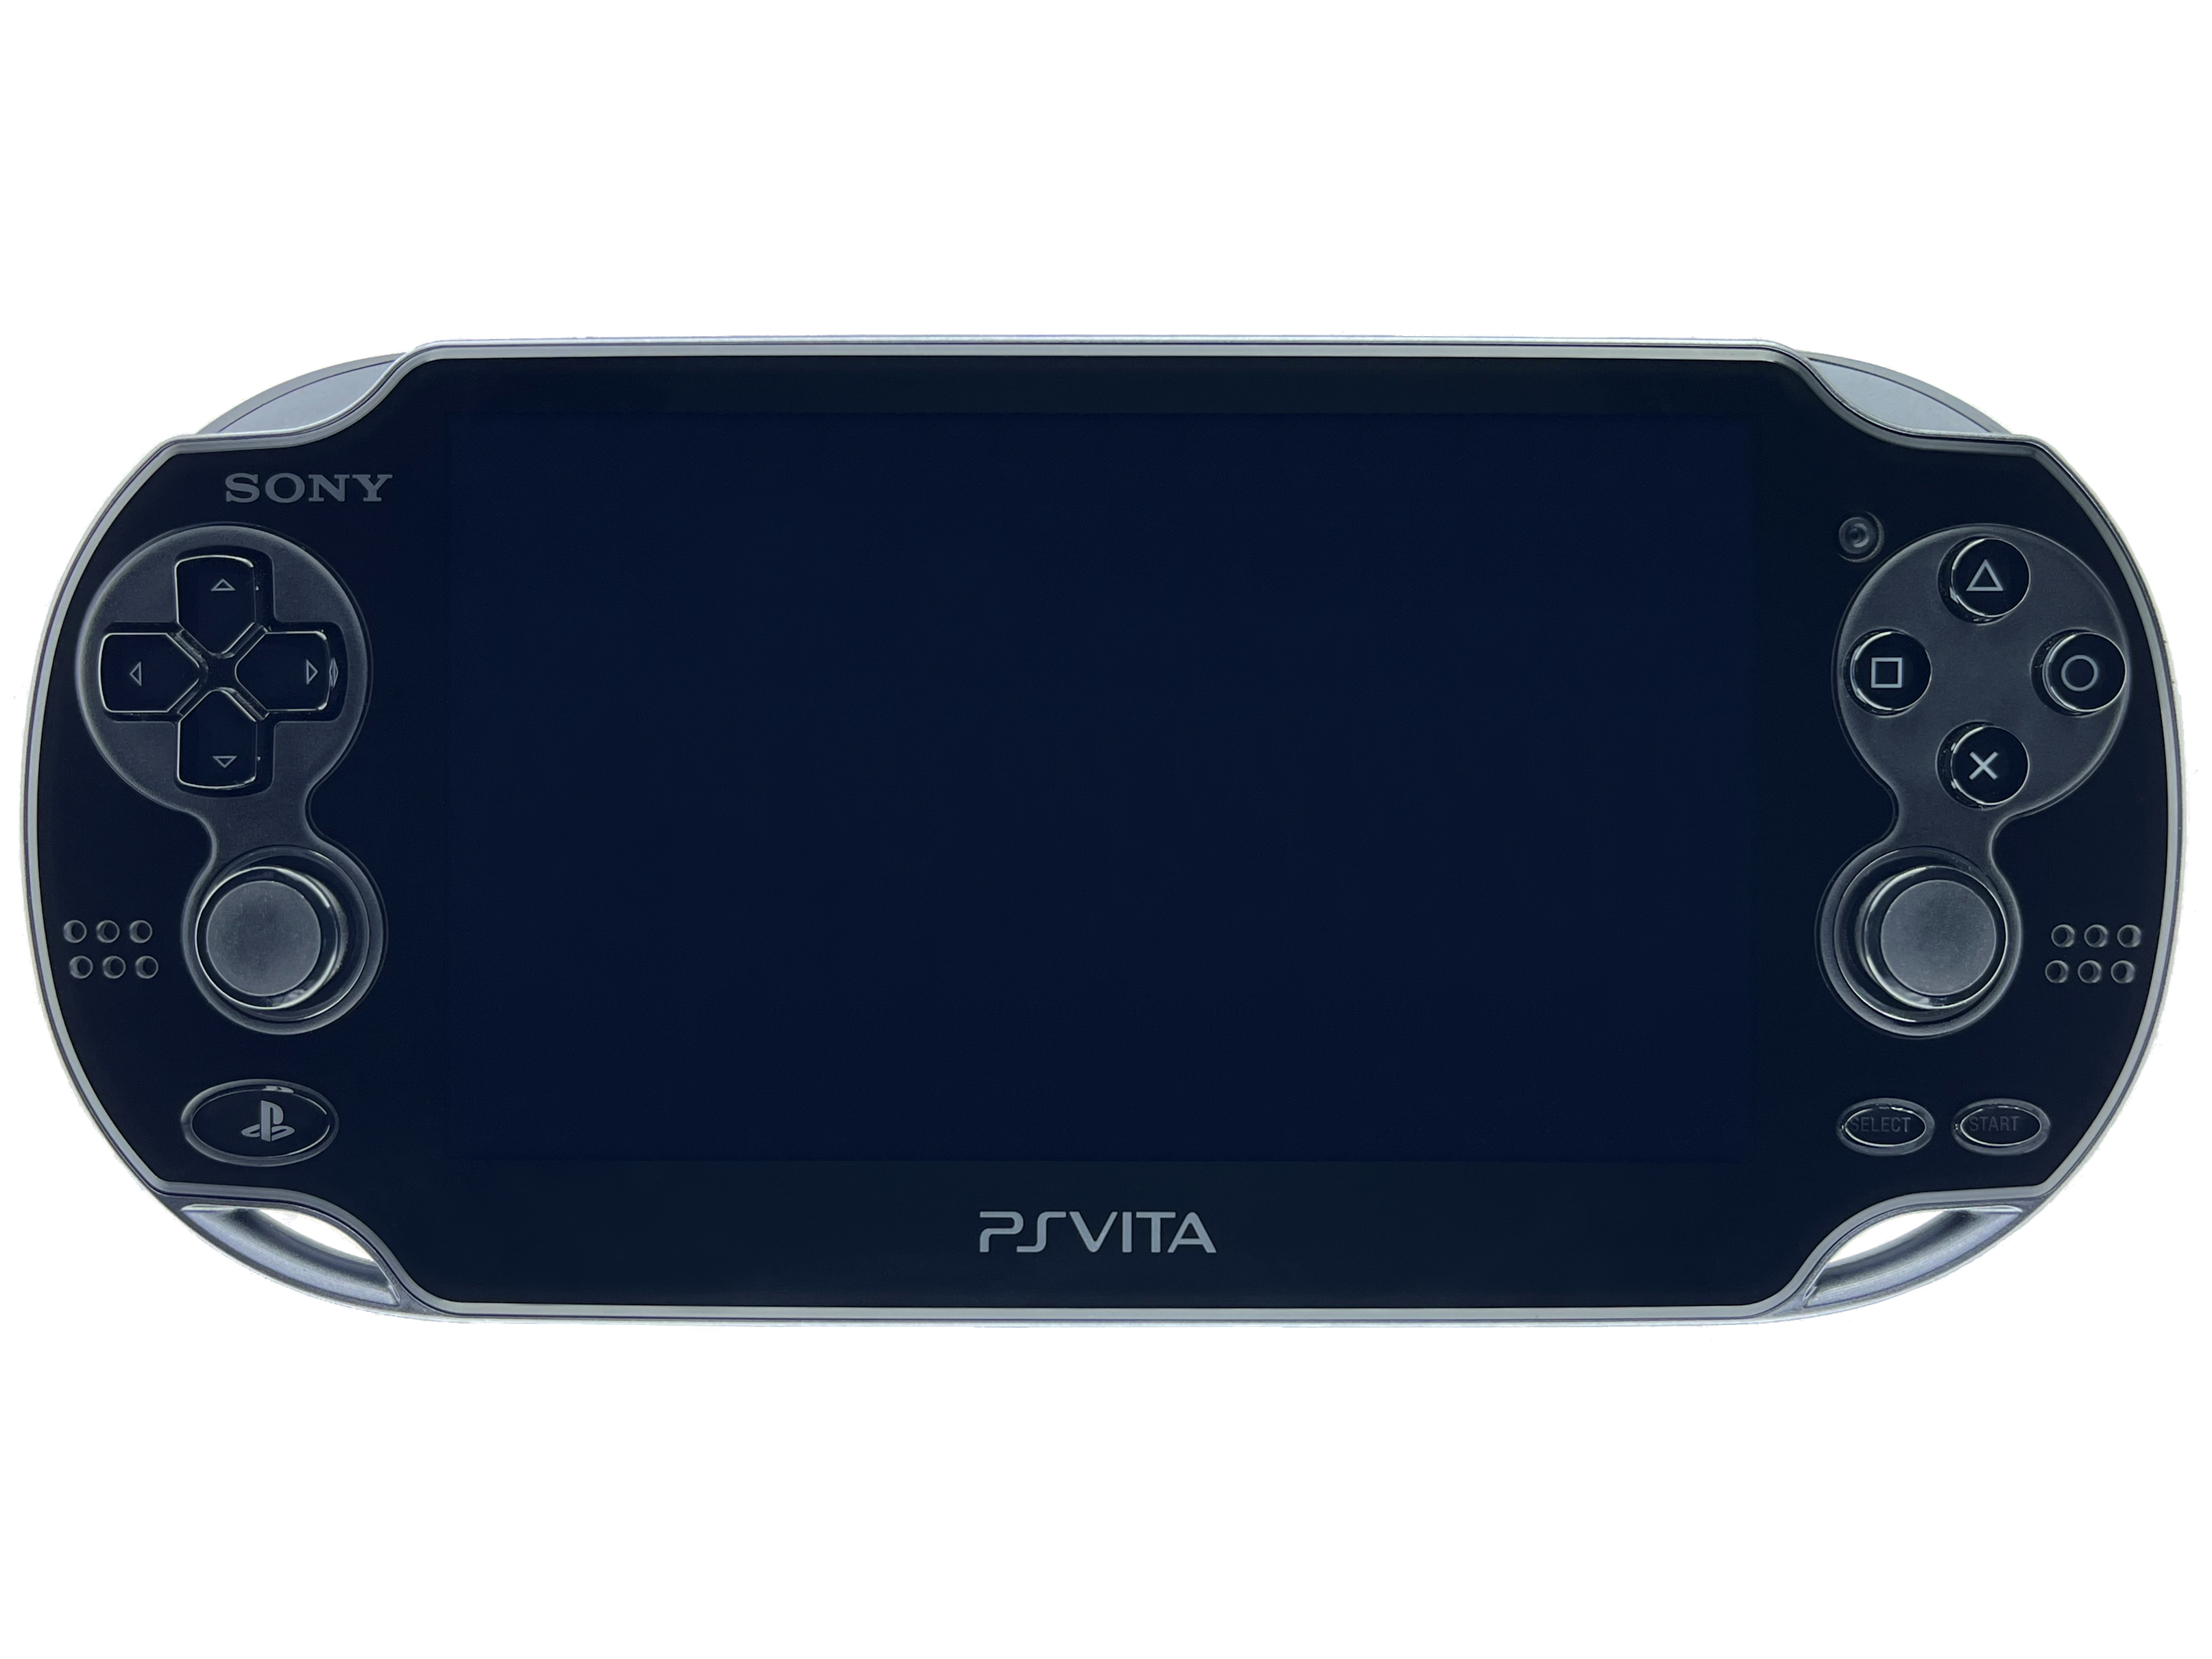 Sony PS Vita CEM-3000NZ1 Hatsune Miku Prototype Console 